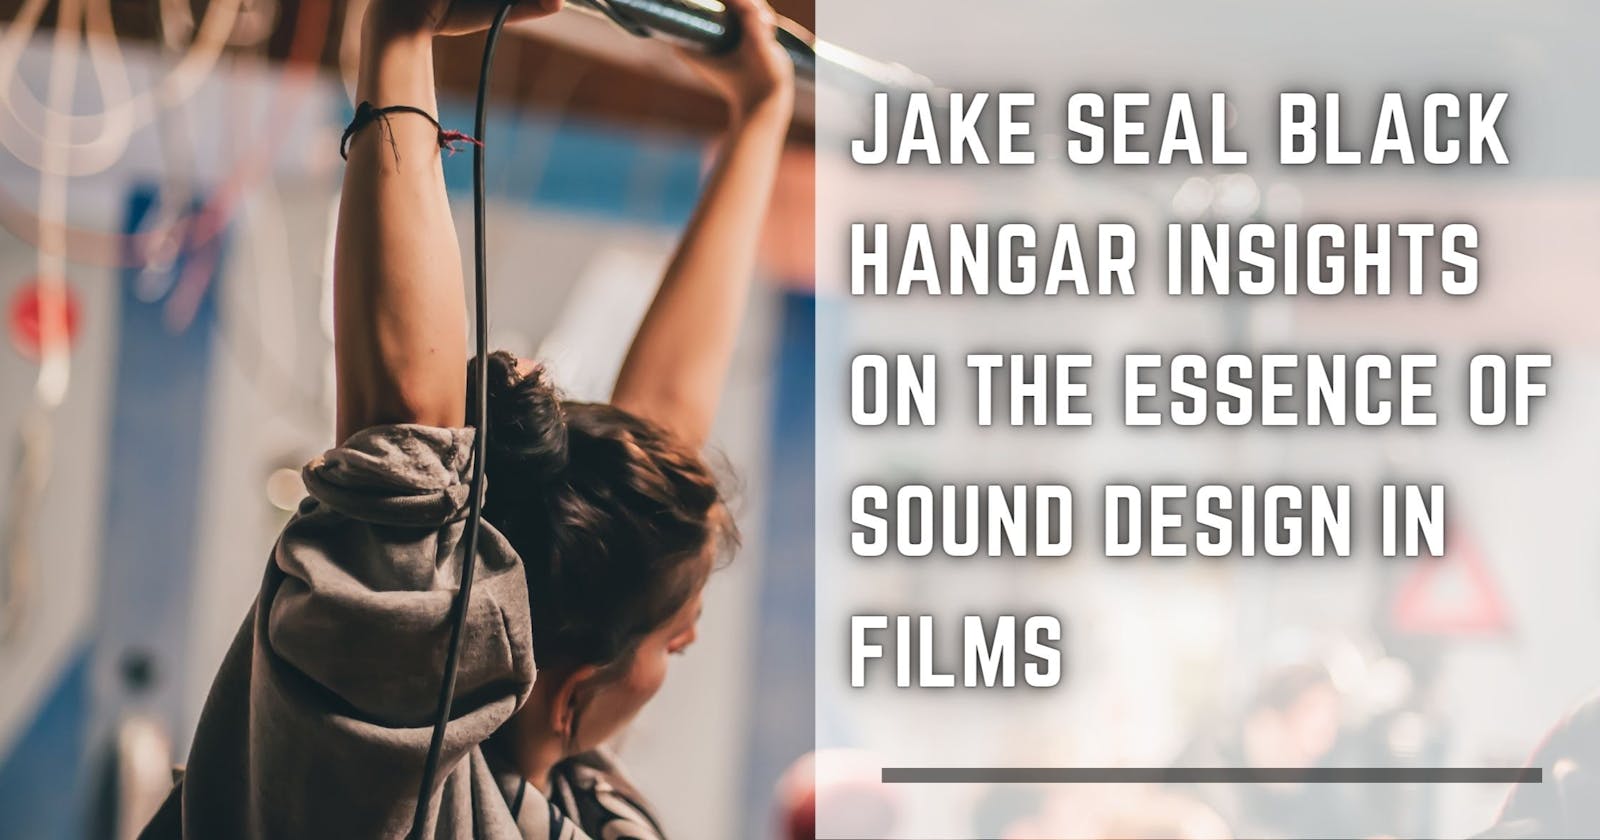 Jake Seal Black Hangar Insights on the Essence of Sound Design in Films